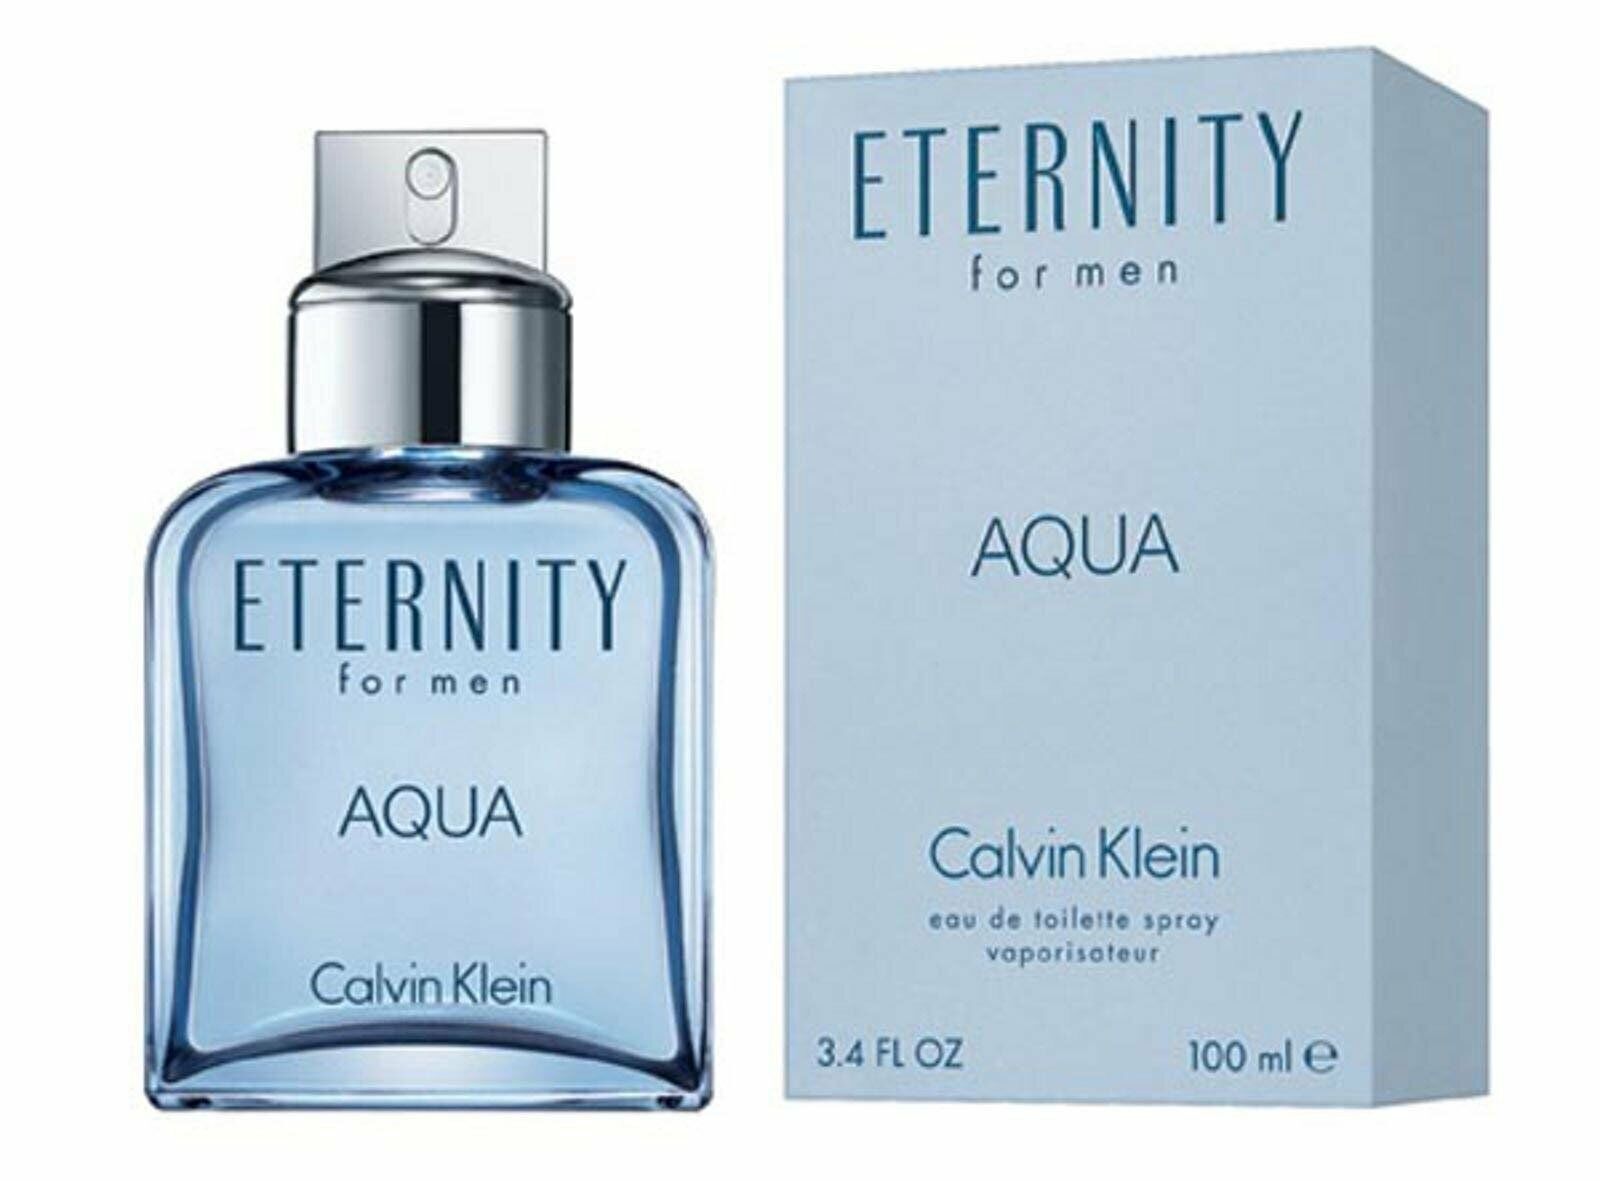 Calvin Klein Eternity For Men Aqua 100ml RRP 57 CLEARANCE XL 29.99